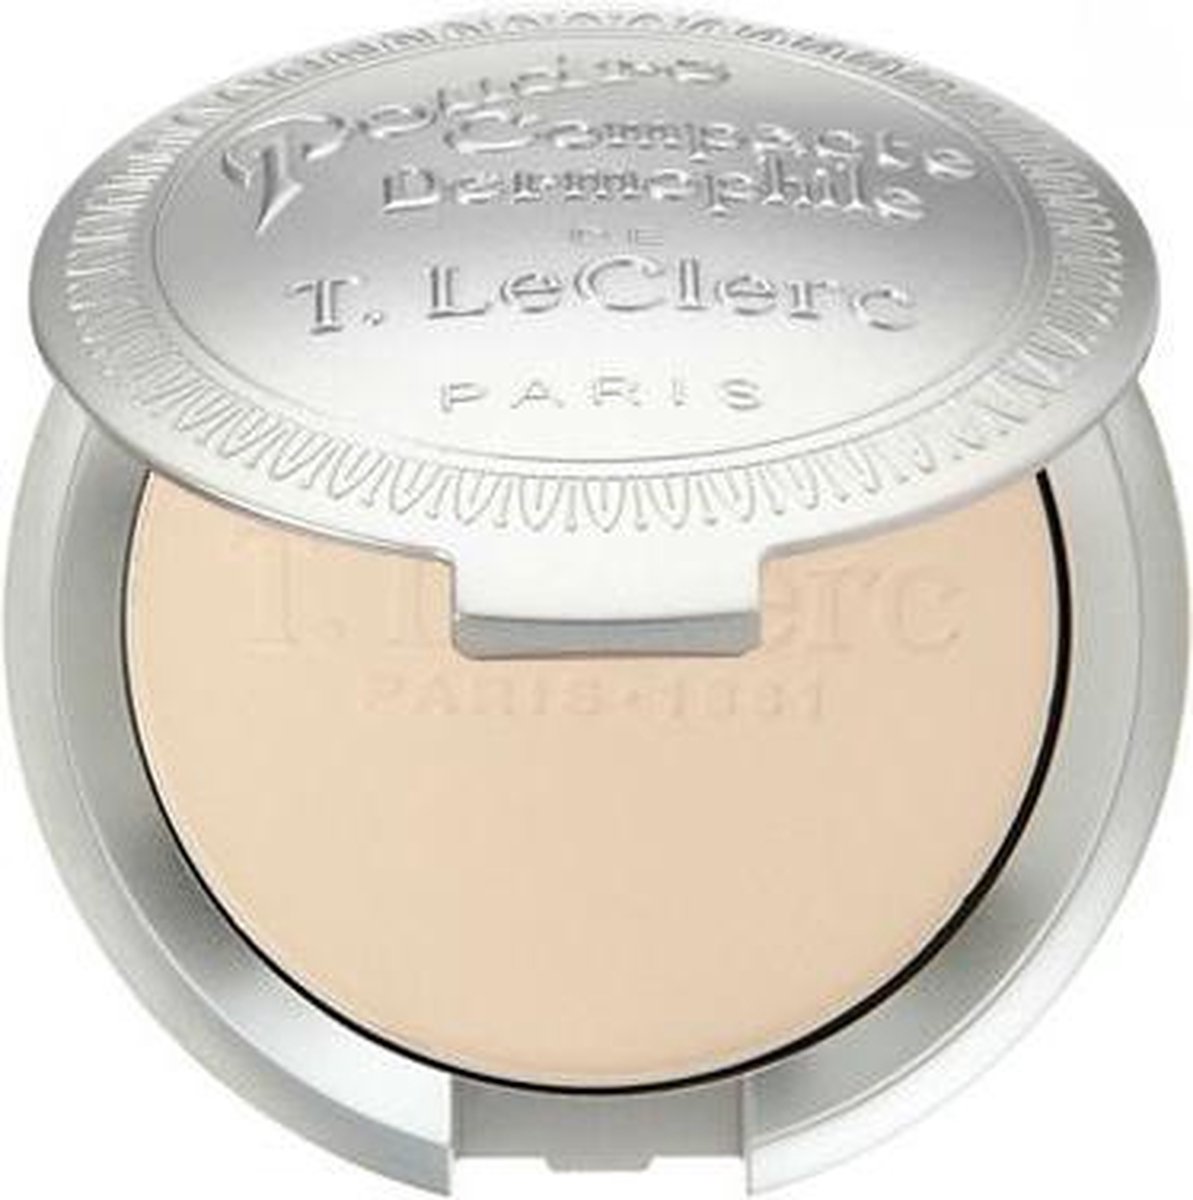 Compact Powders LeClerc 09 Peche (9 g) - T. LeClerc